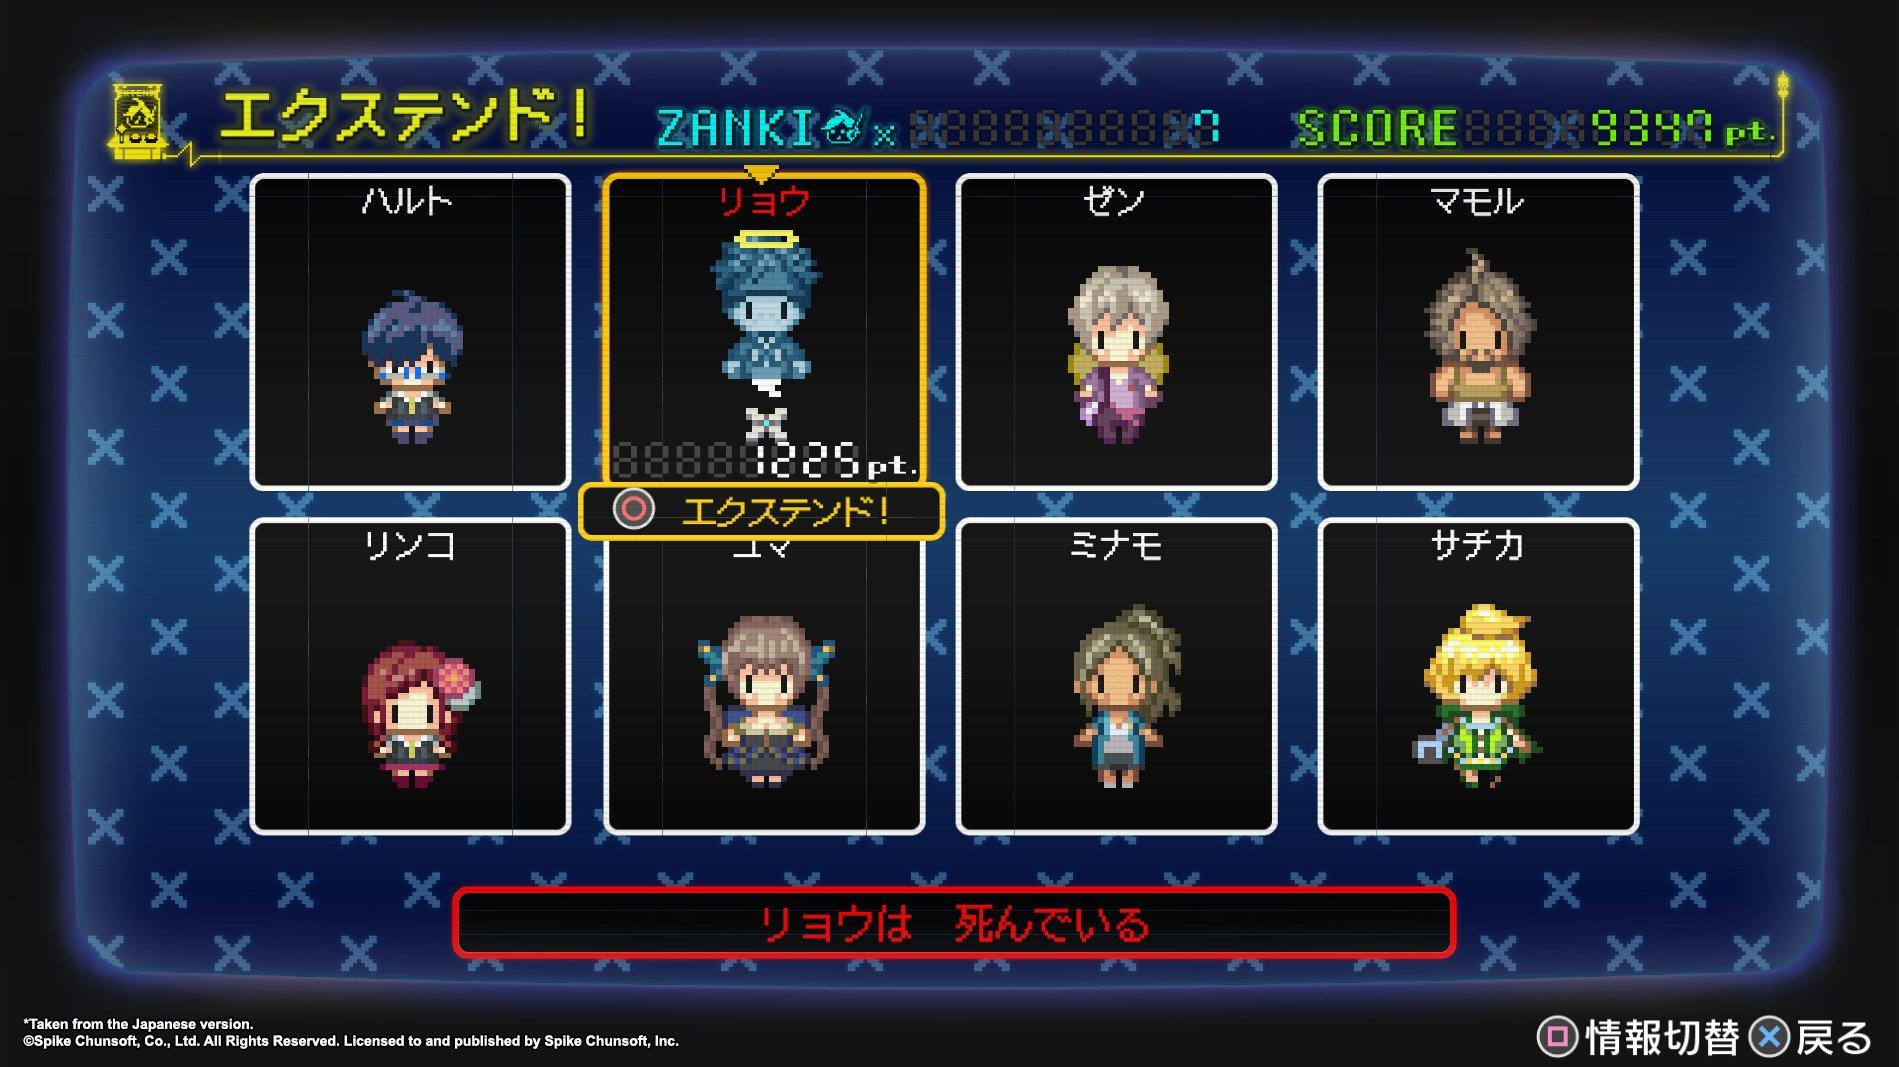 Zanki Zero: Last Beginning - PlayStation 4 | Spike Chunsoft | GameStop